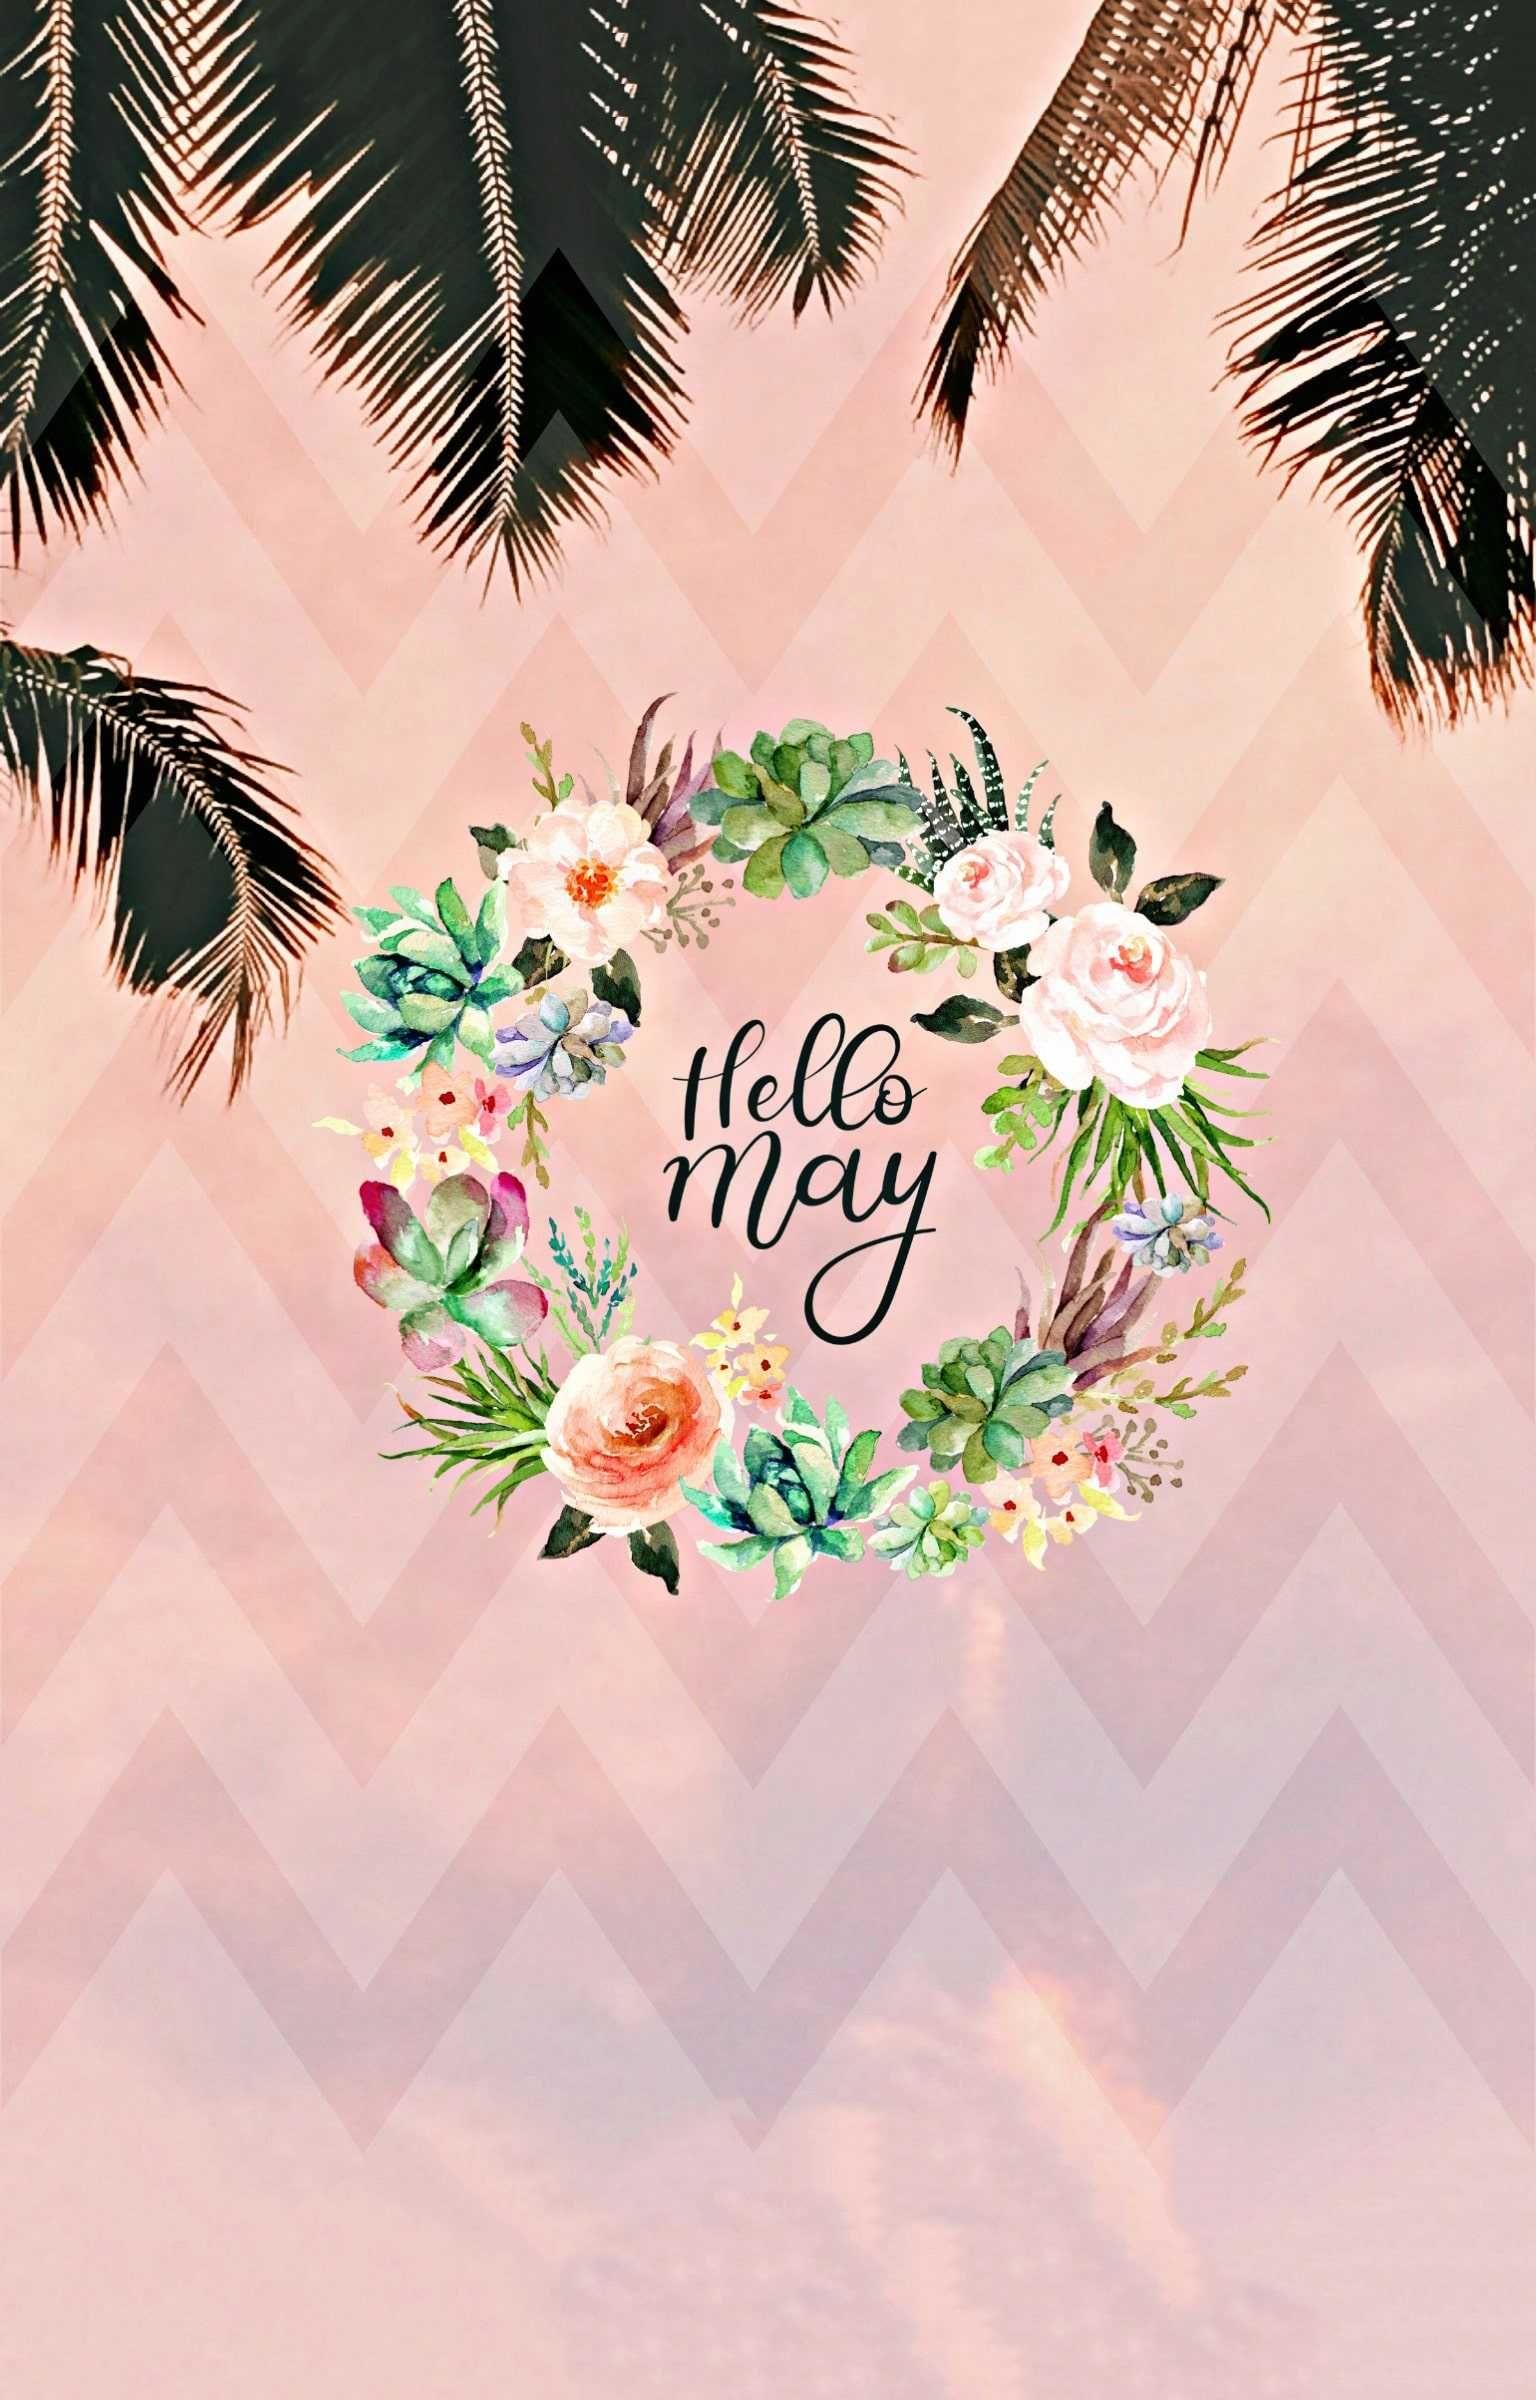 Hello May! | Instagram